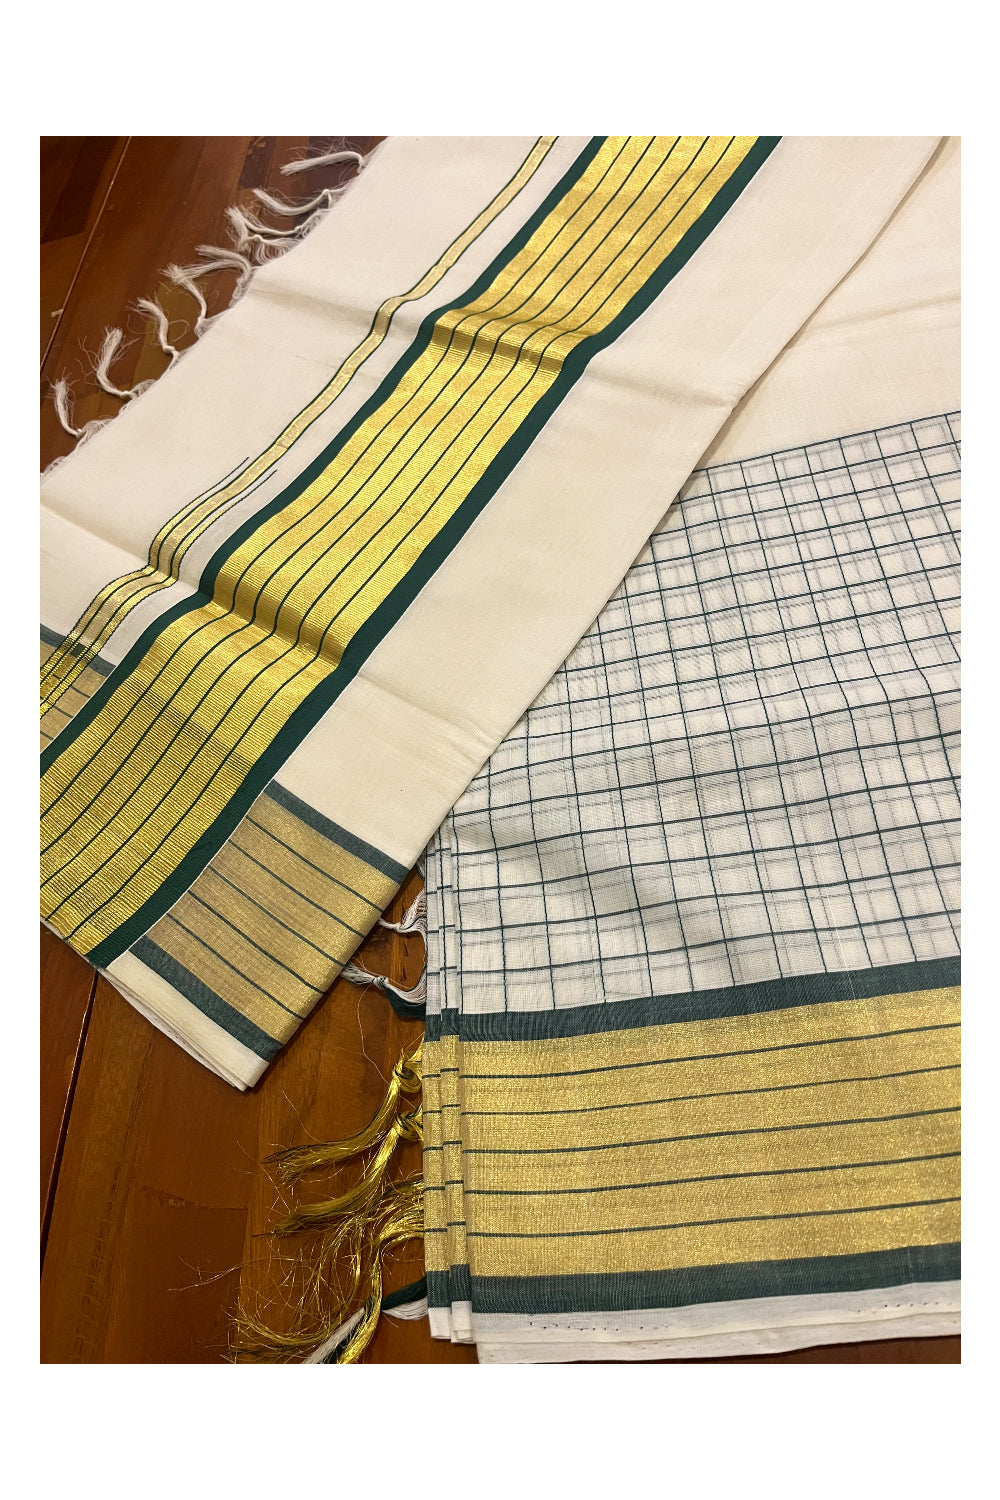 Southloom Premium Handloom Cotton Saree with Green and Kasavu Lines Border